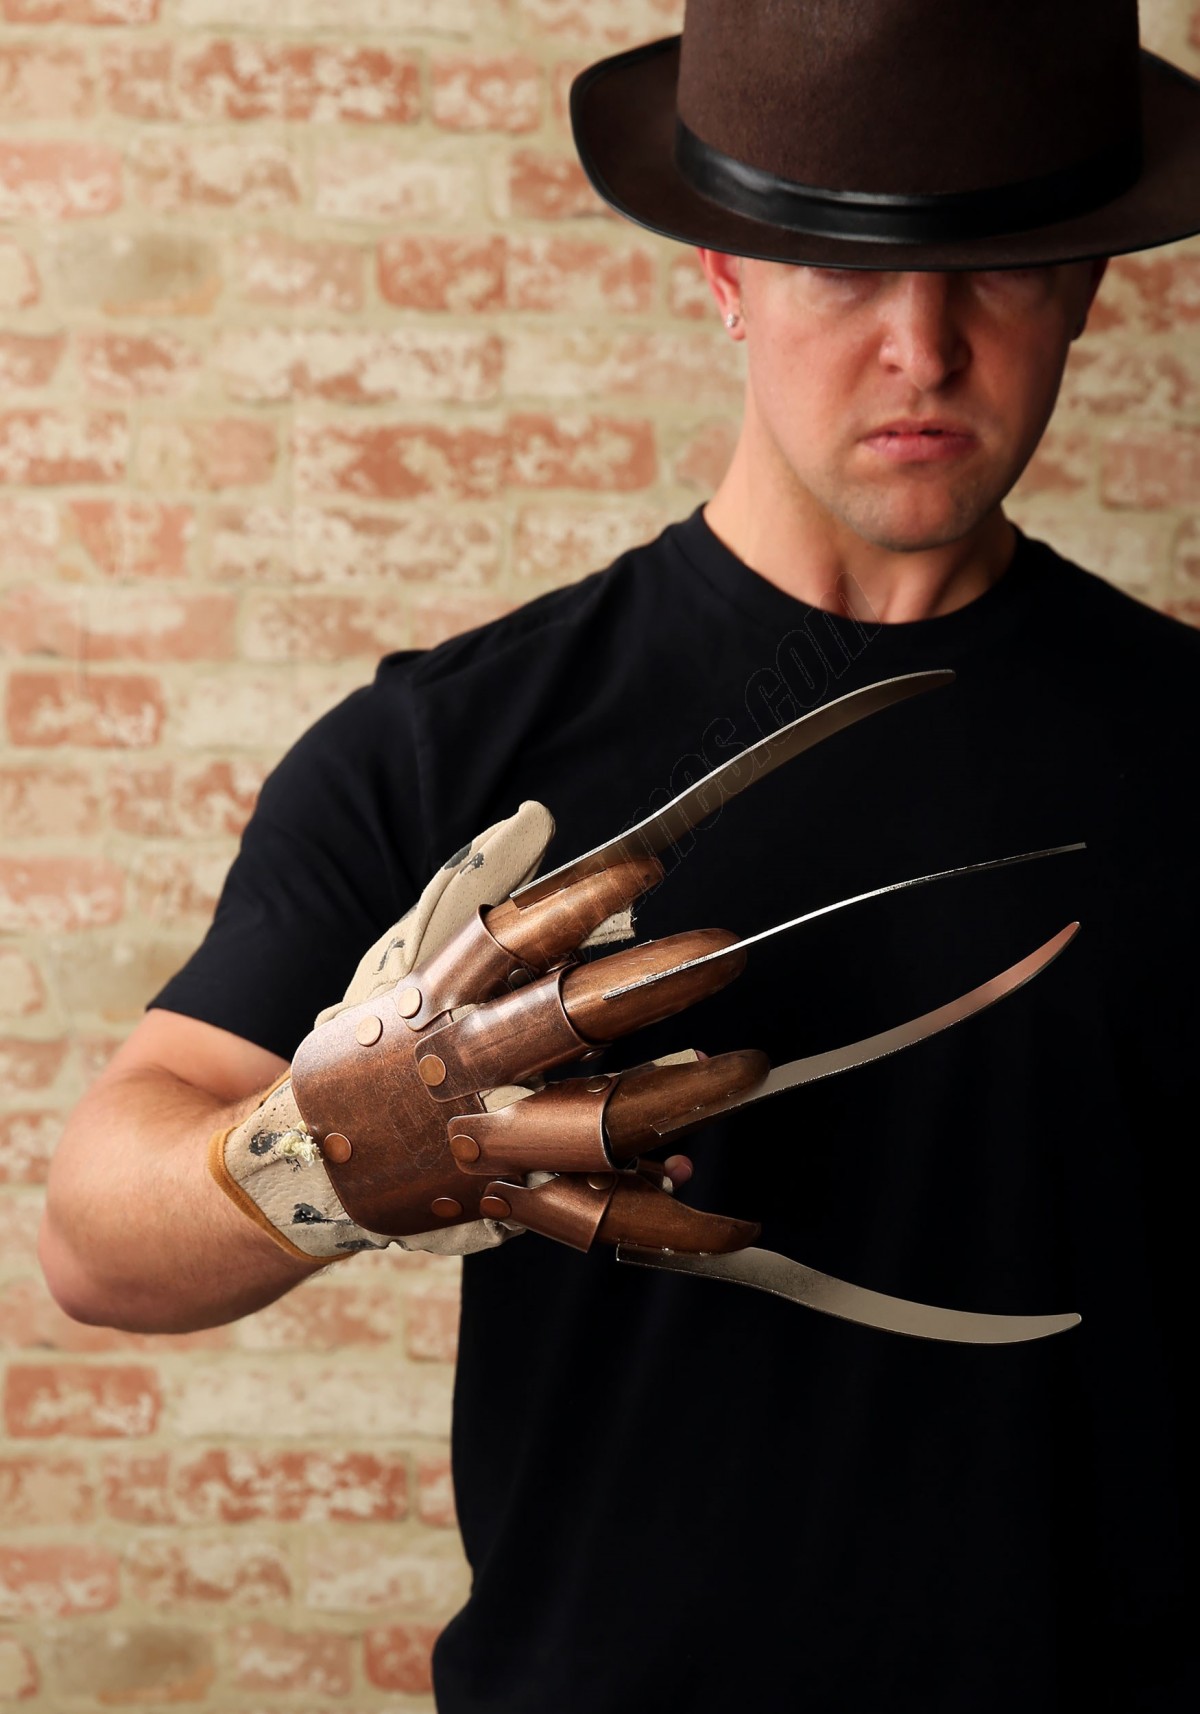 Replica Freddy Krueger Glove Promotions - -1